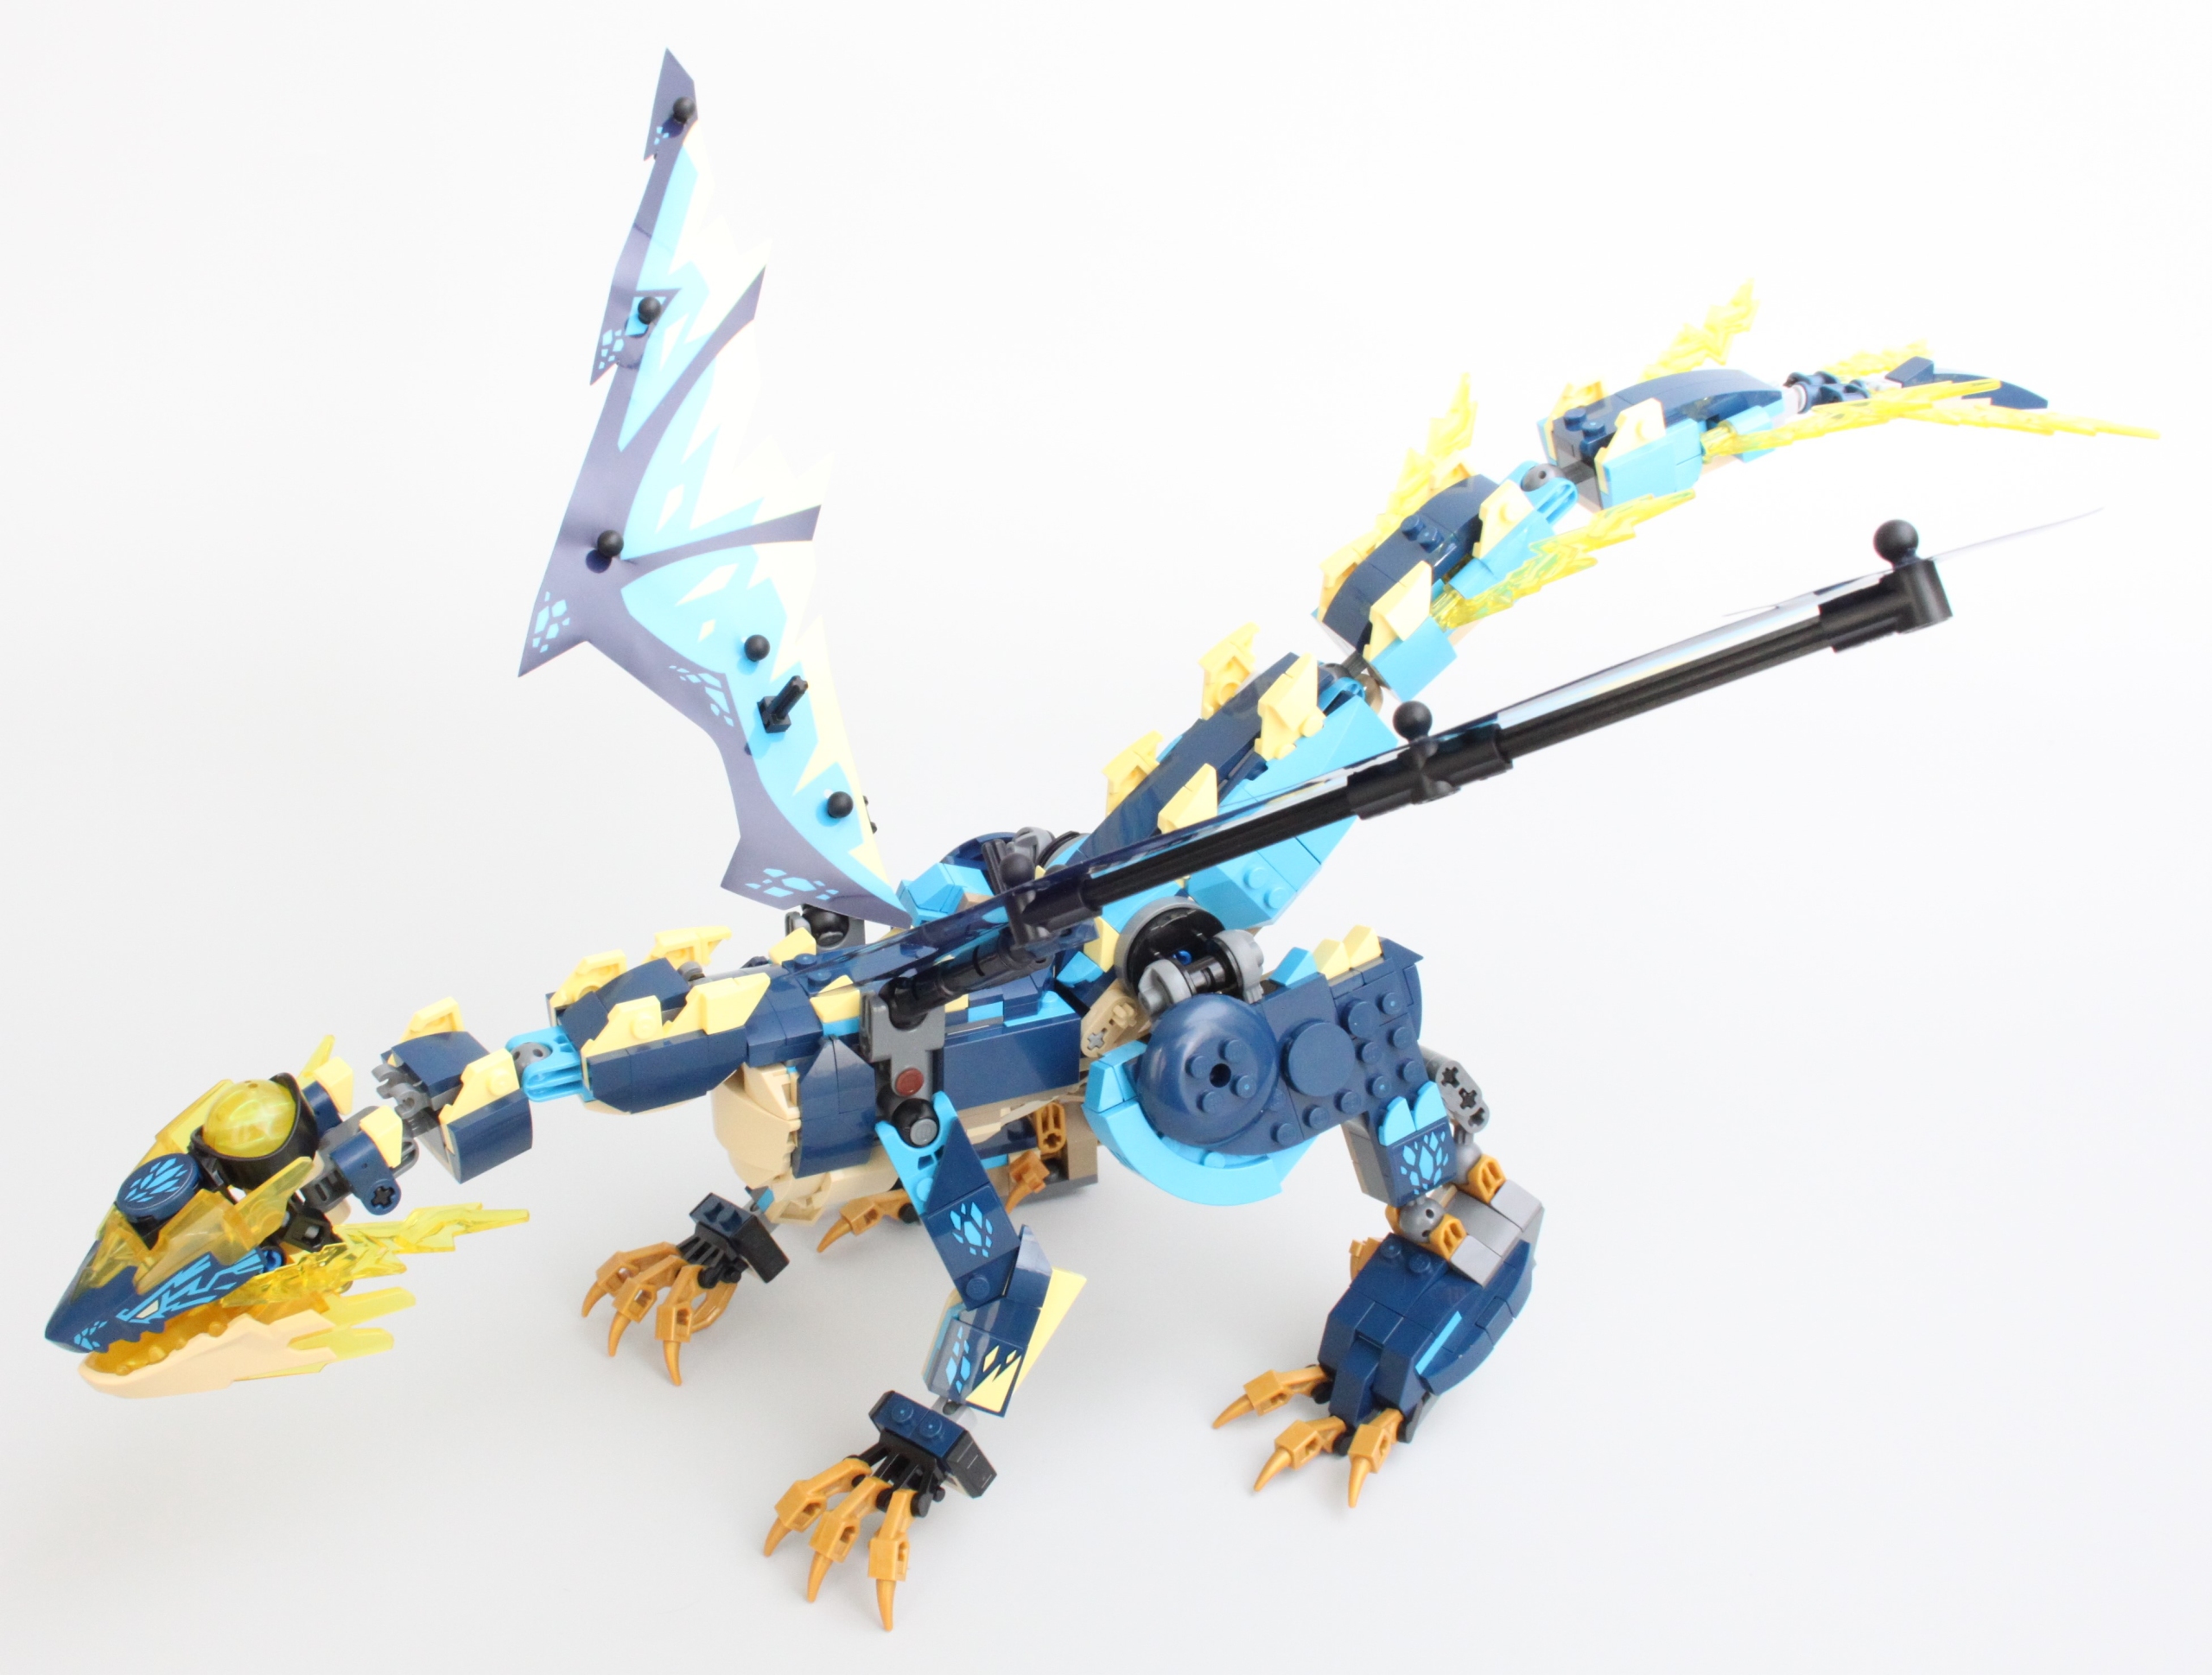 LEGO NINJAGO 71796 Elemental Dragon vs. The Empress Mech Review